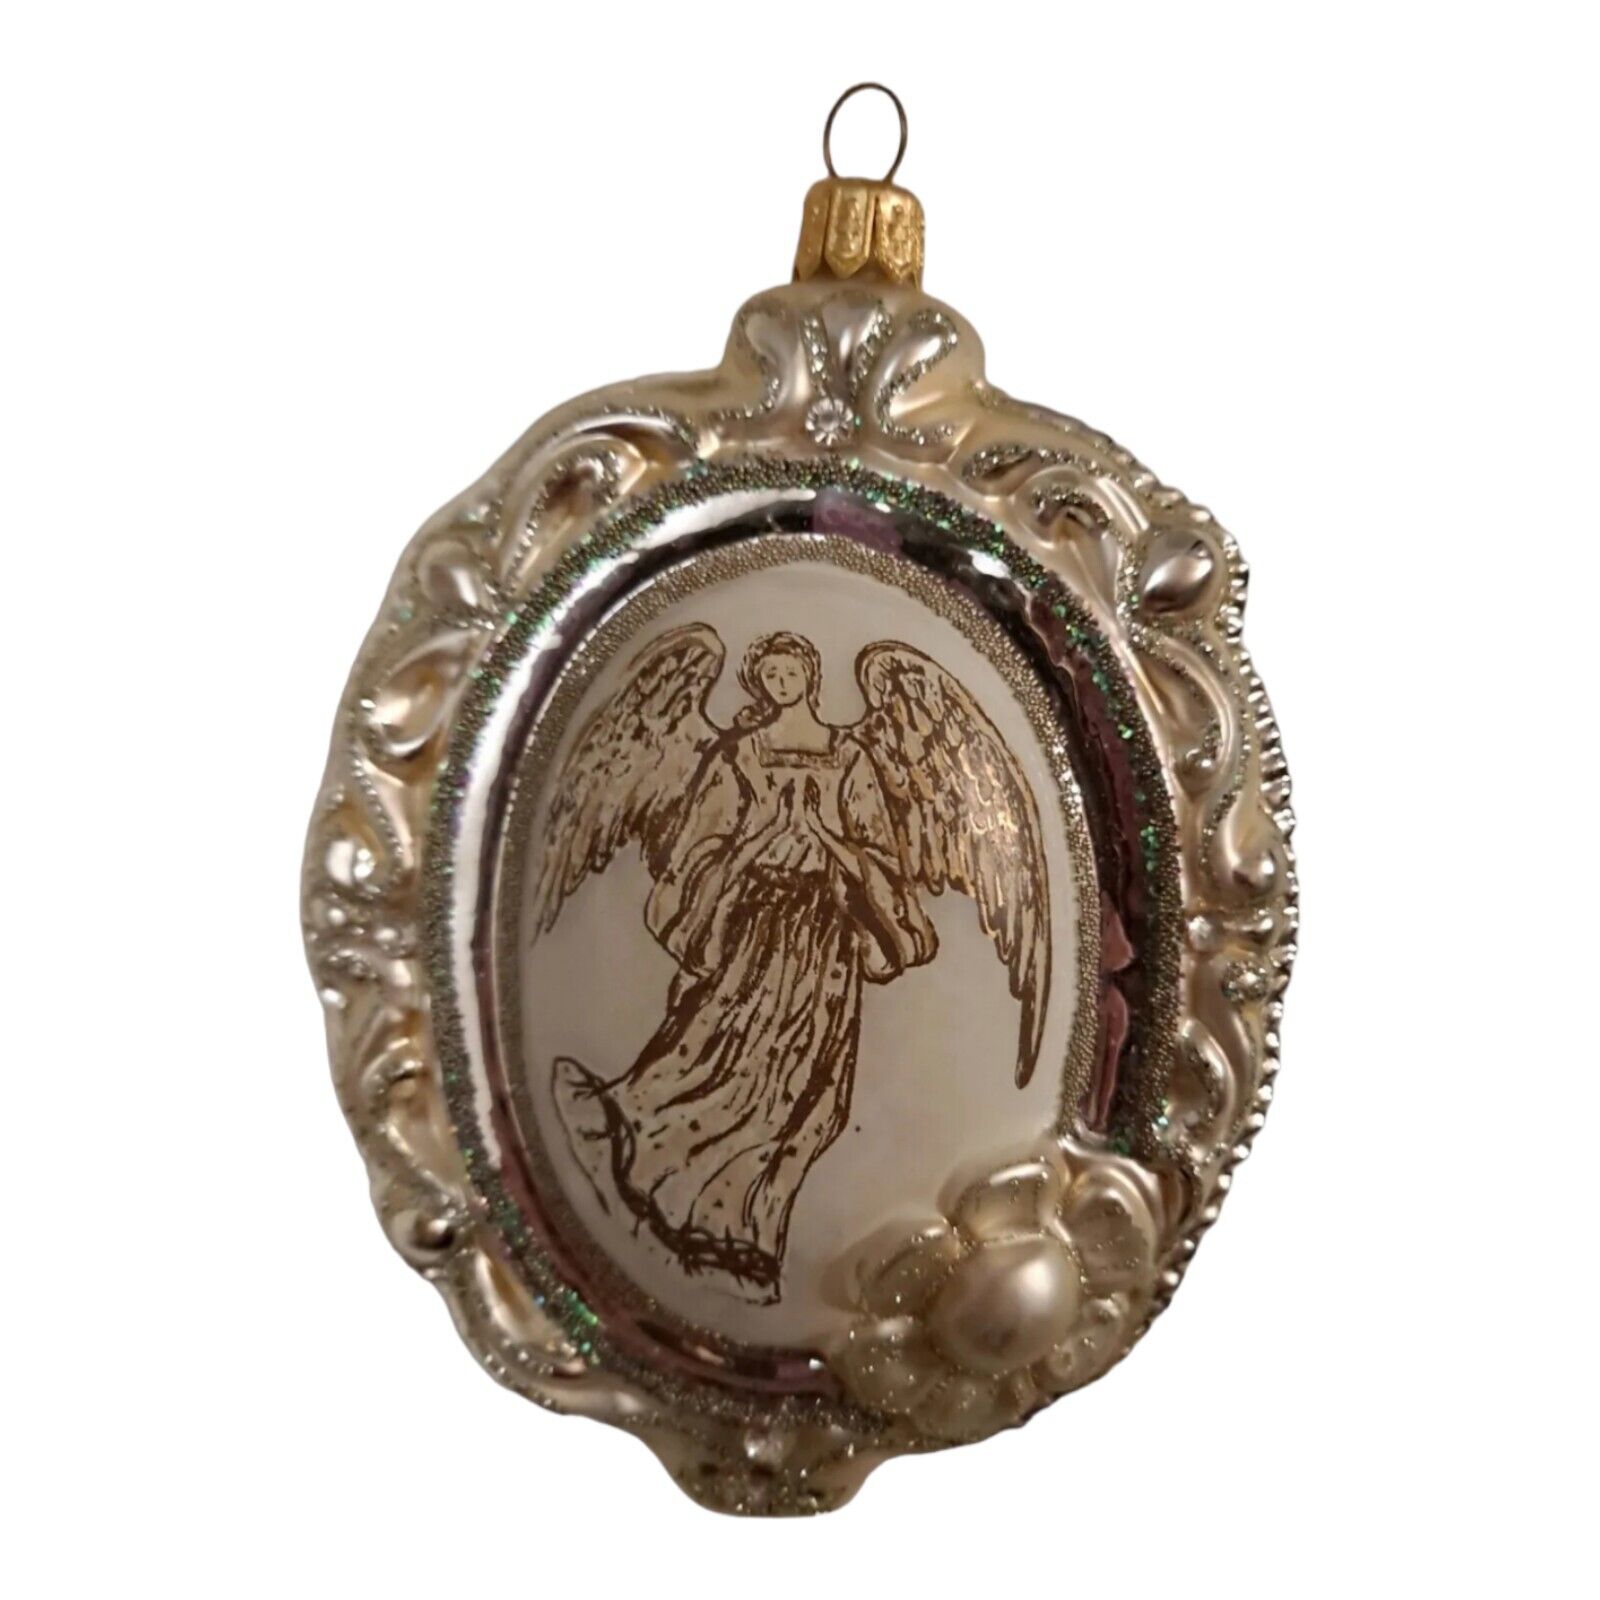 Dillard's Trimmings Angel Handcrafted Christmas Glass Ornament Treasured Heirloo